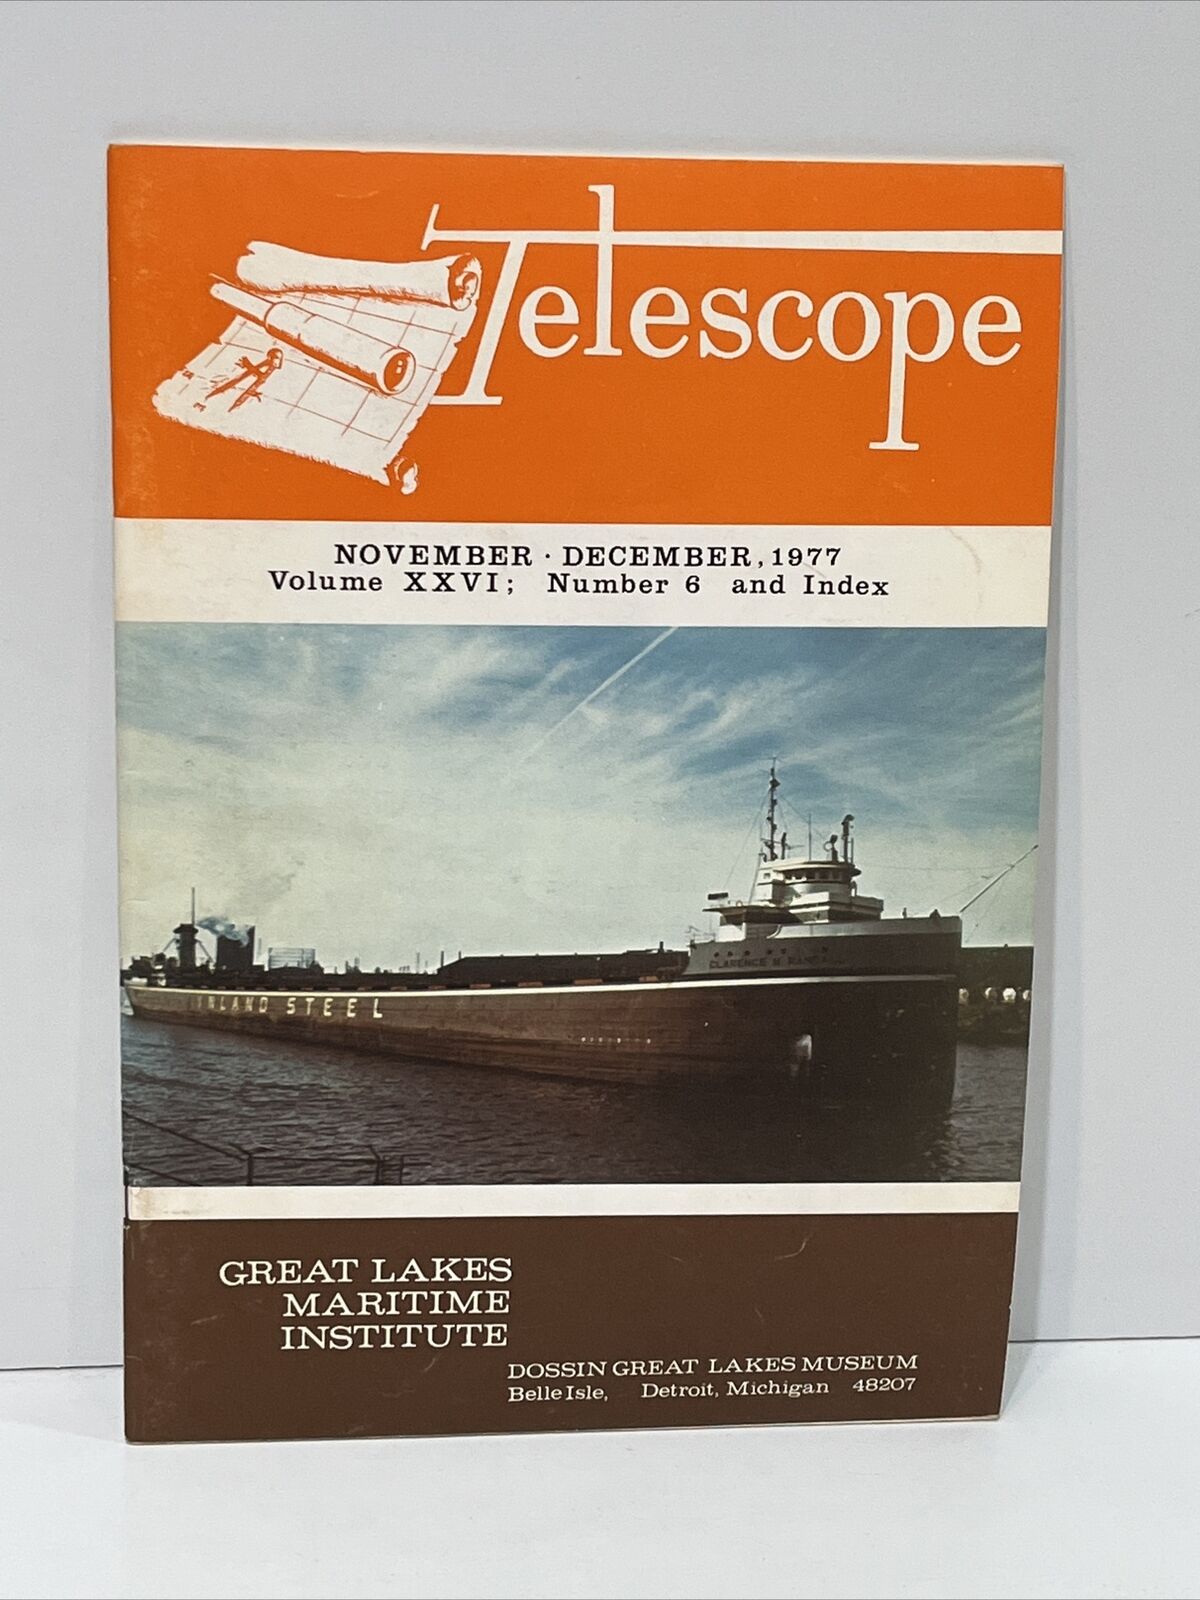 Telescope Journal Great Lakes Maritime Institute Dossin Museum 1977 Number 6